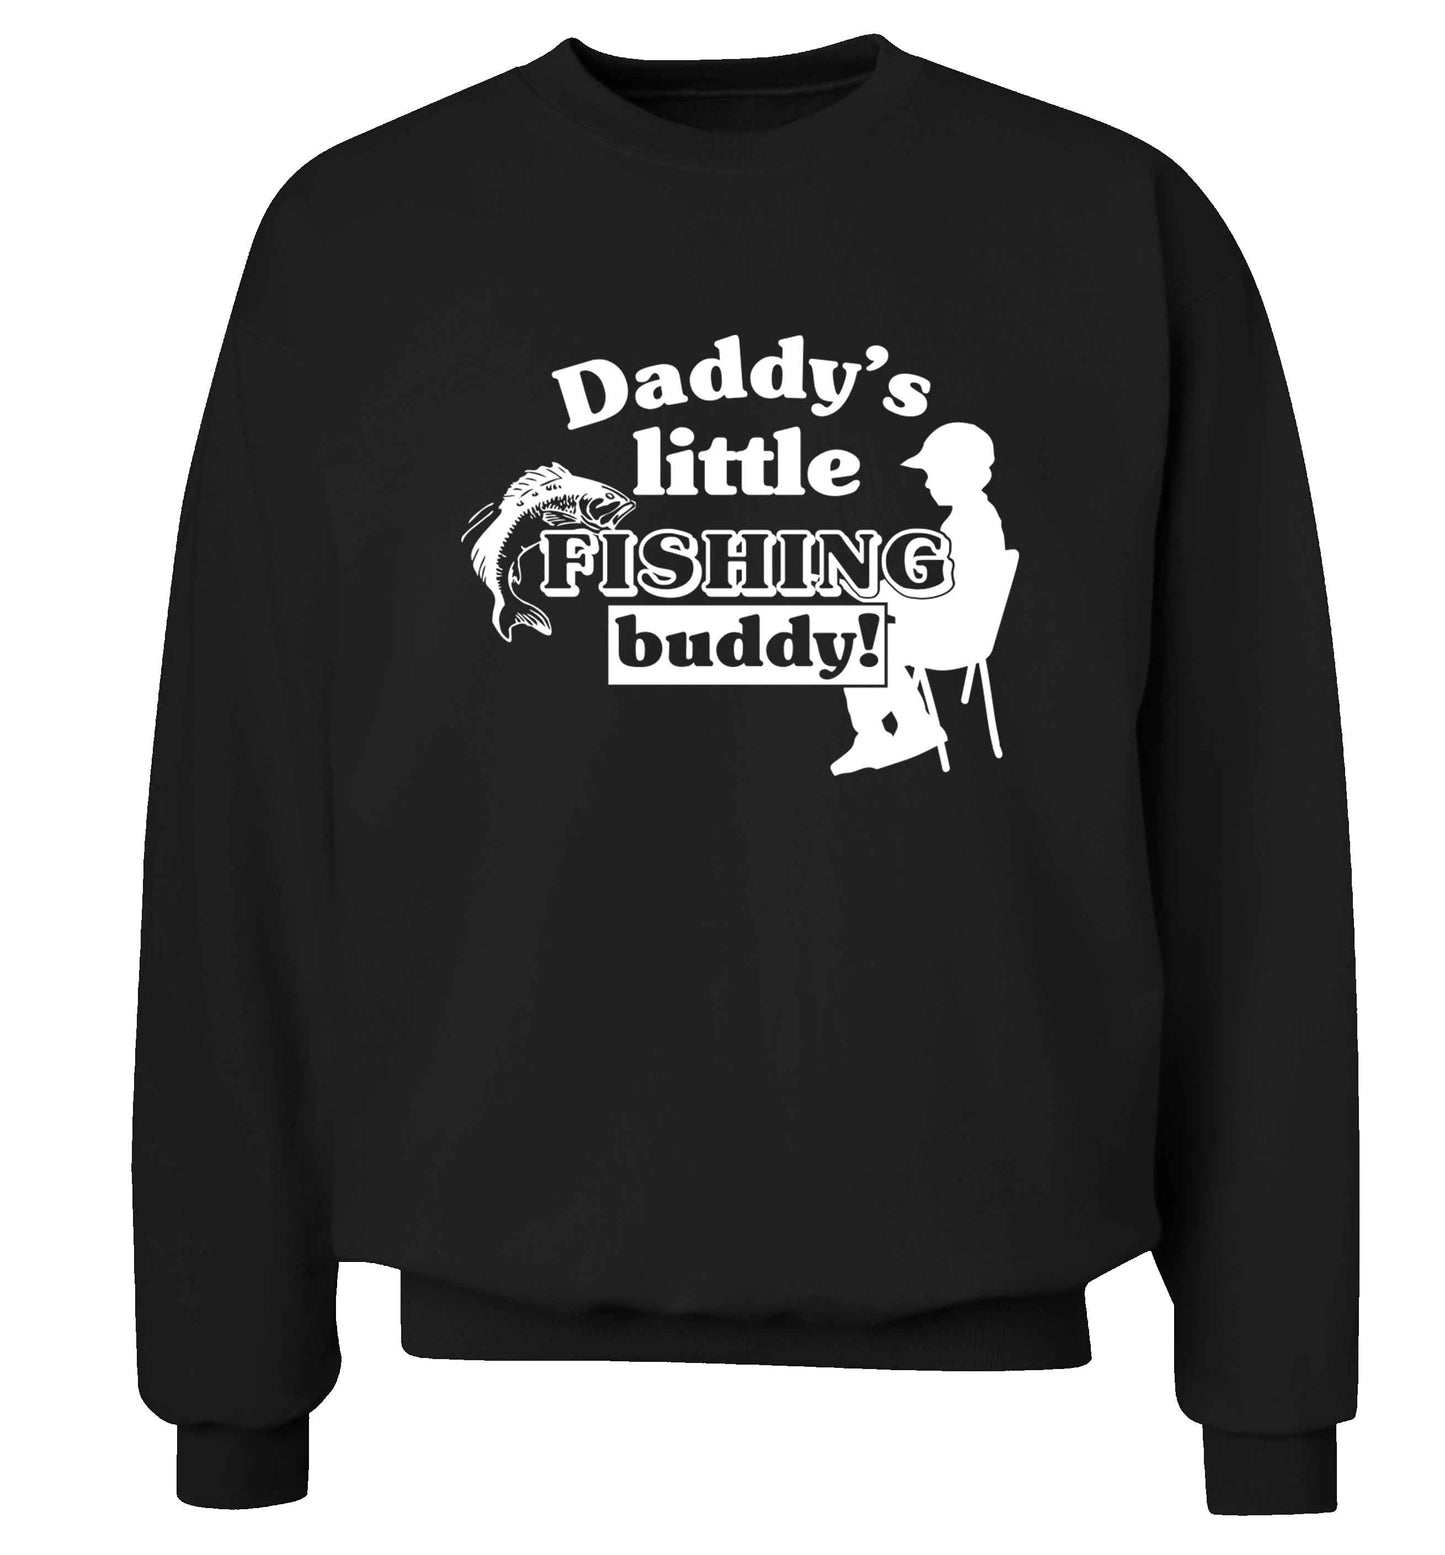 Daddy's little fishing buddy Adult's unisex black Sweater 2XL